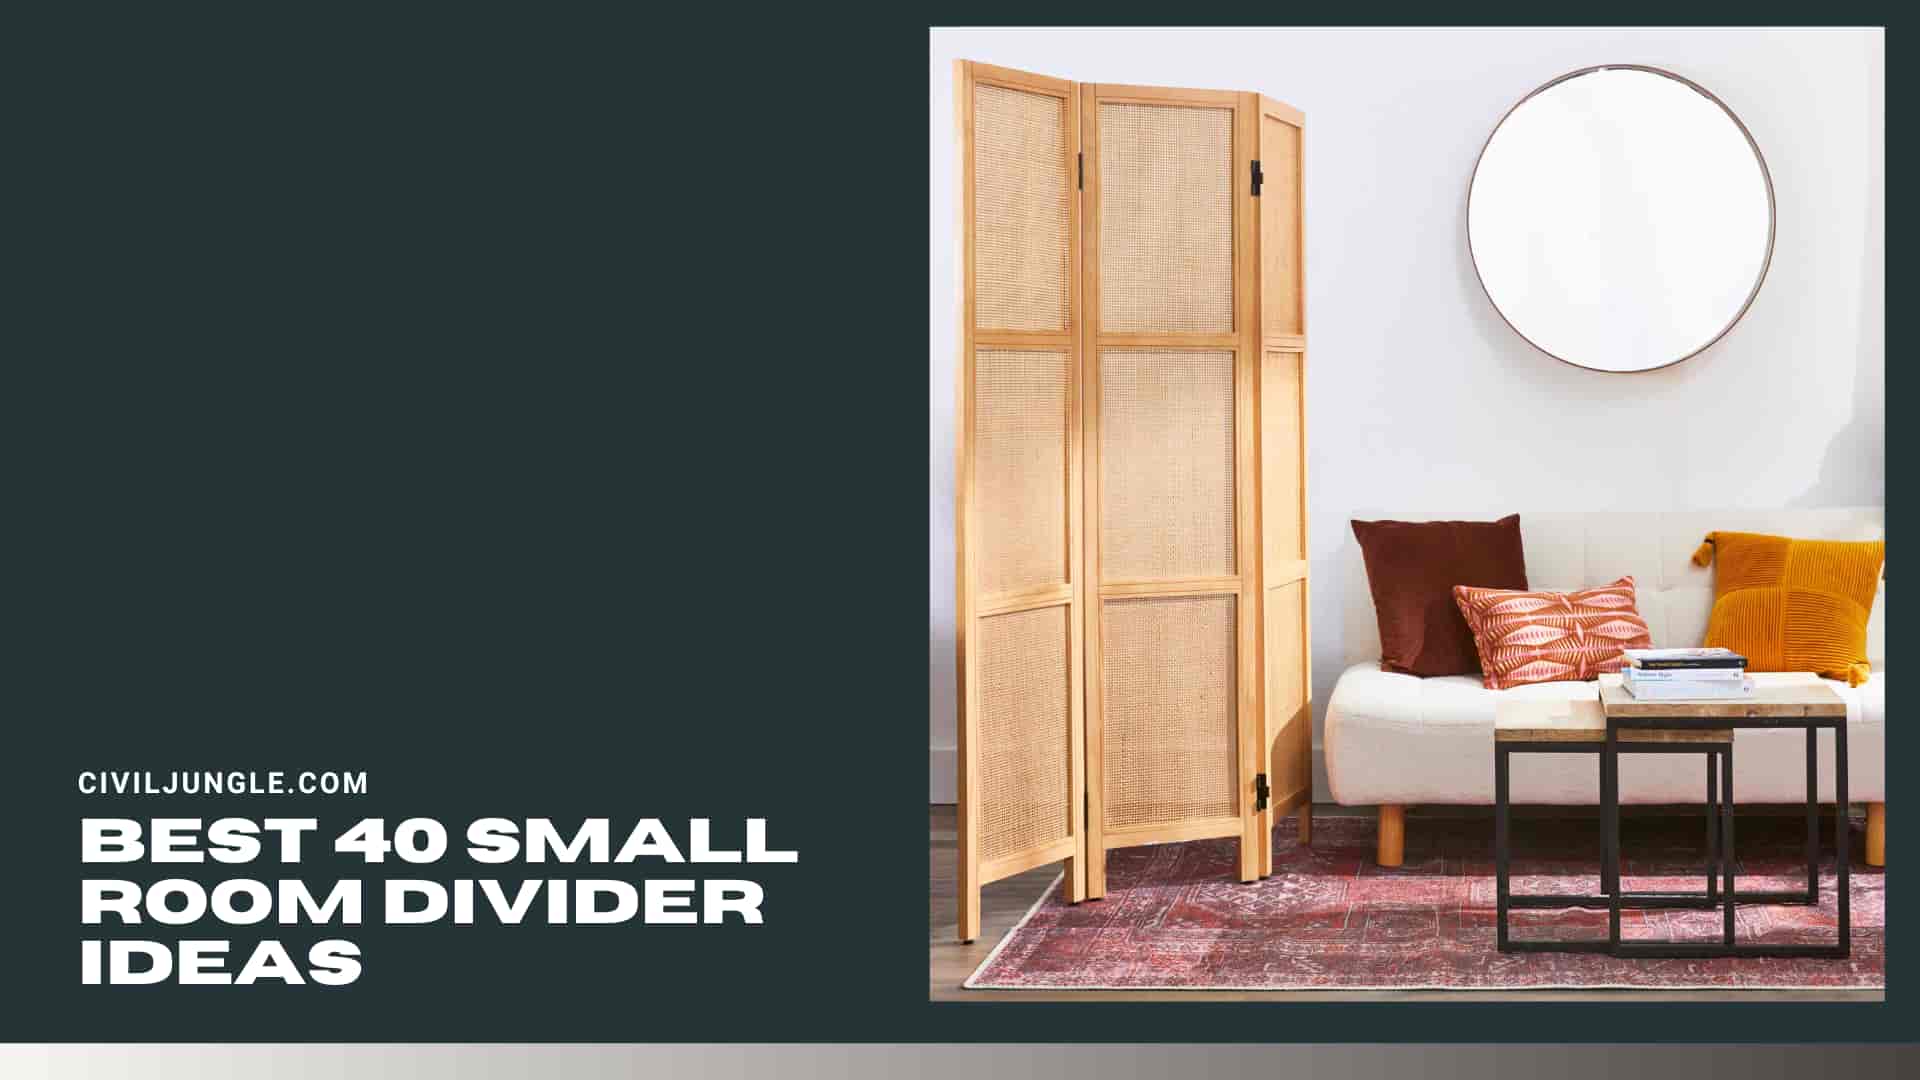 Best 26 Small Room Divider Ideas